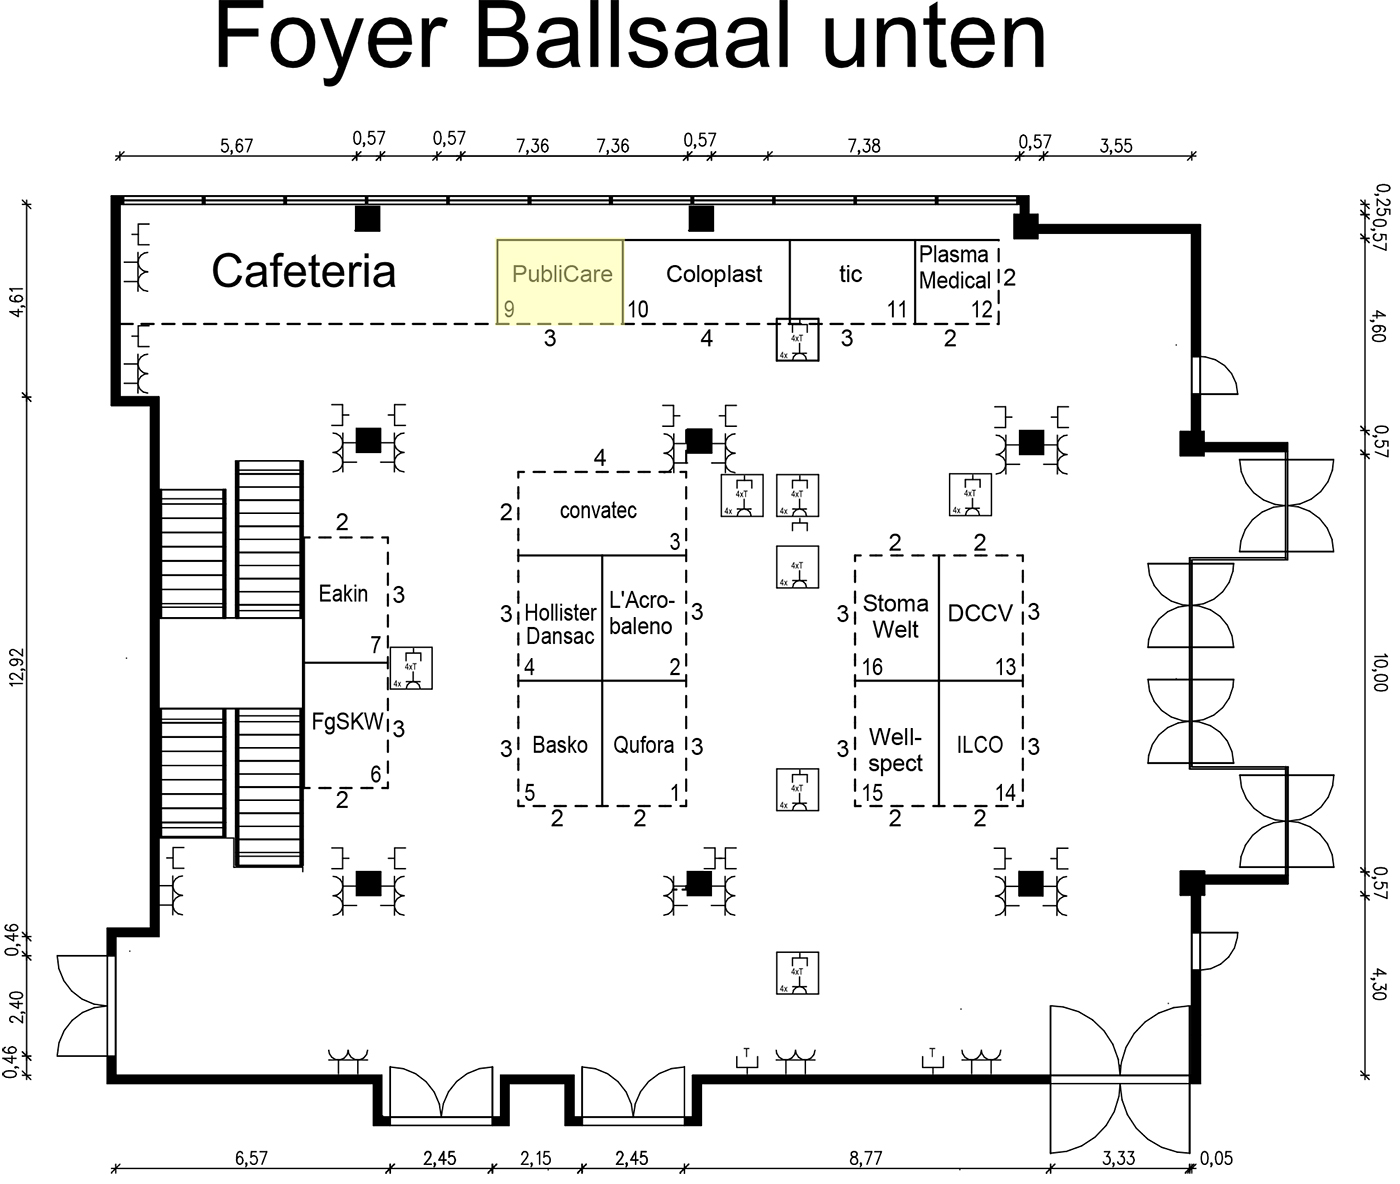 Foyer Ballsaal unten - Stoma-Tag